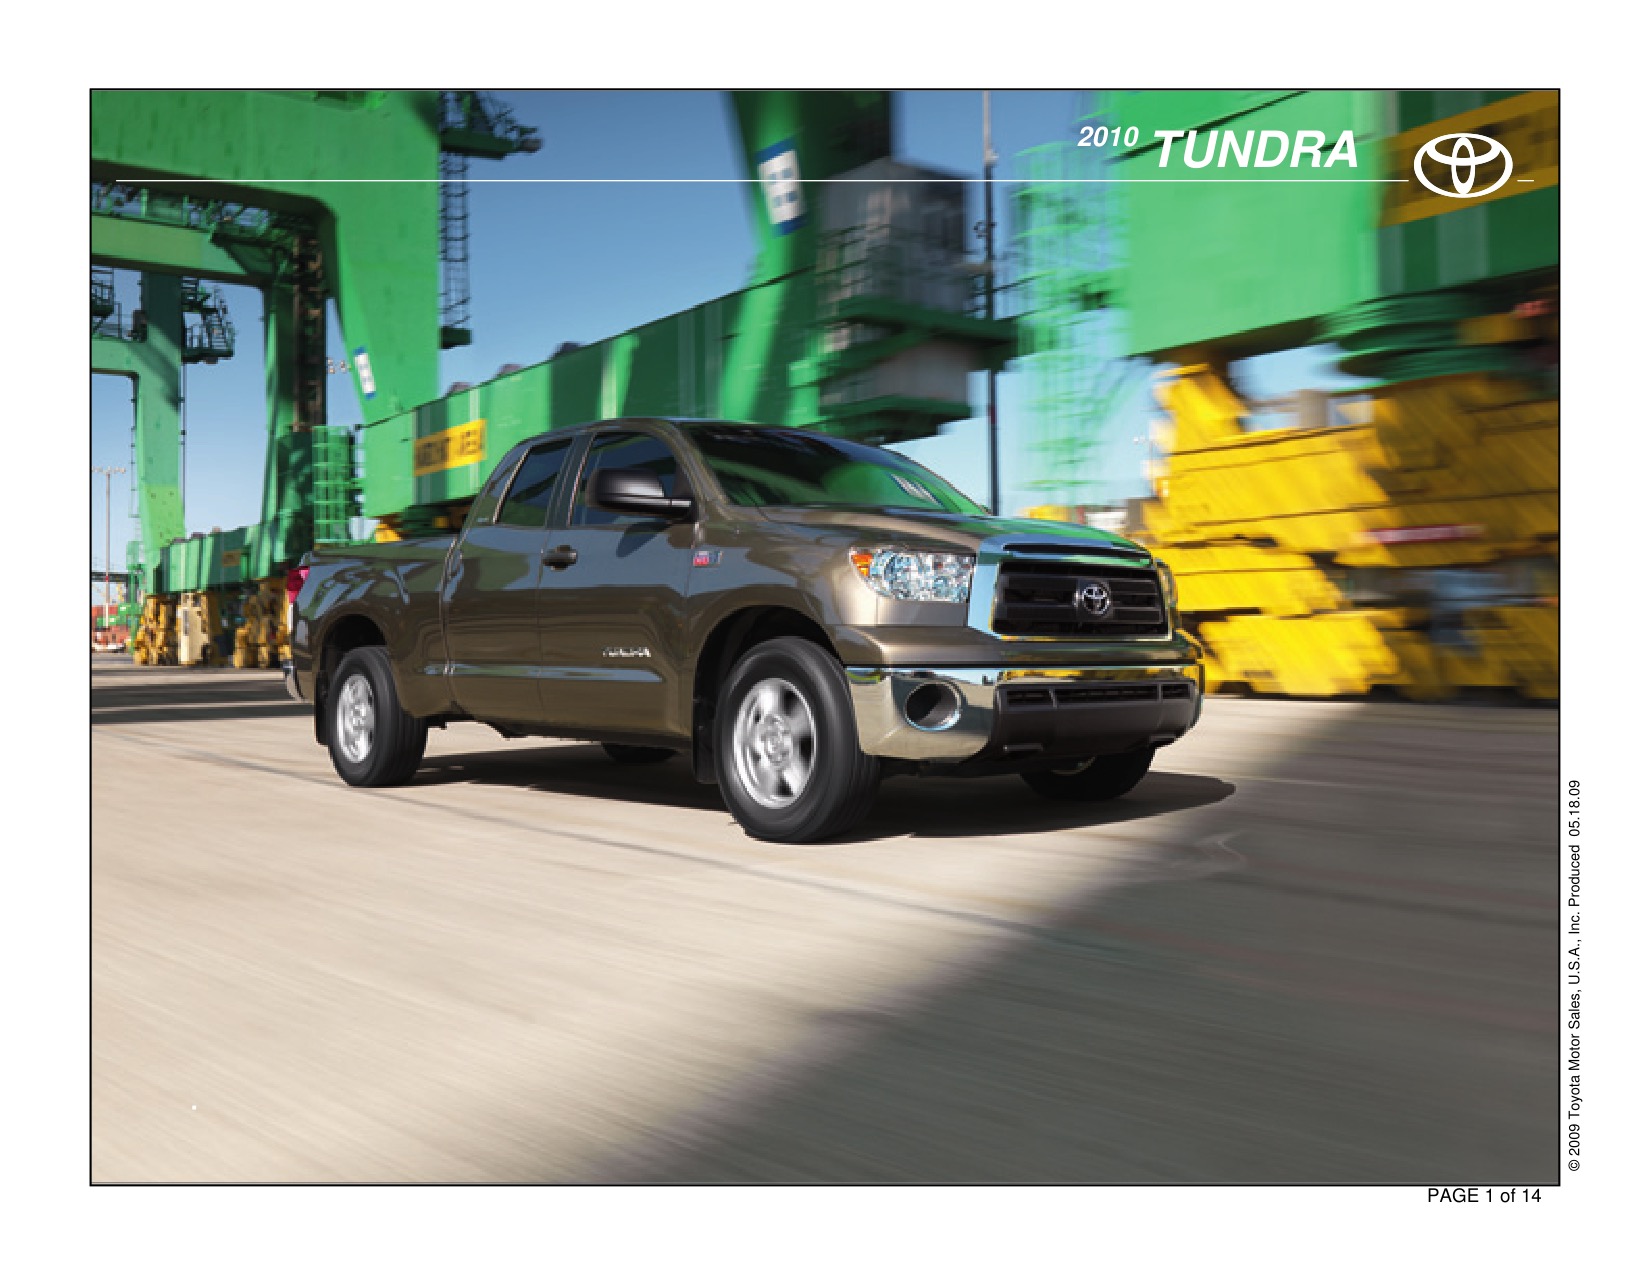 2010 Toyota Tundra RC 4x2 Brochure